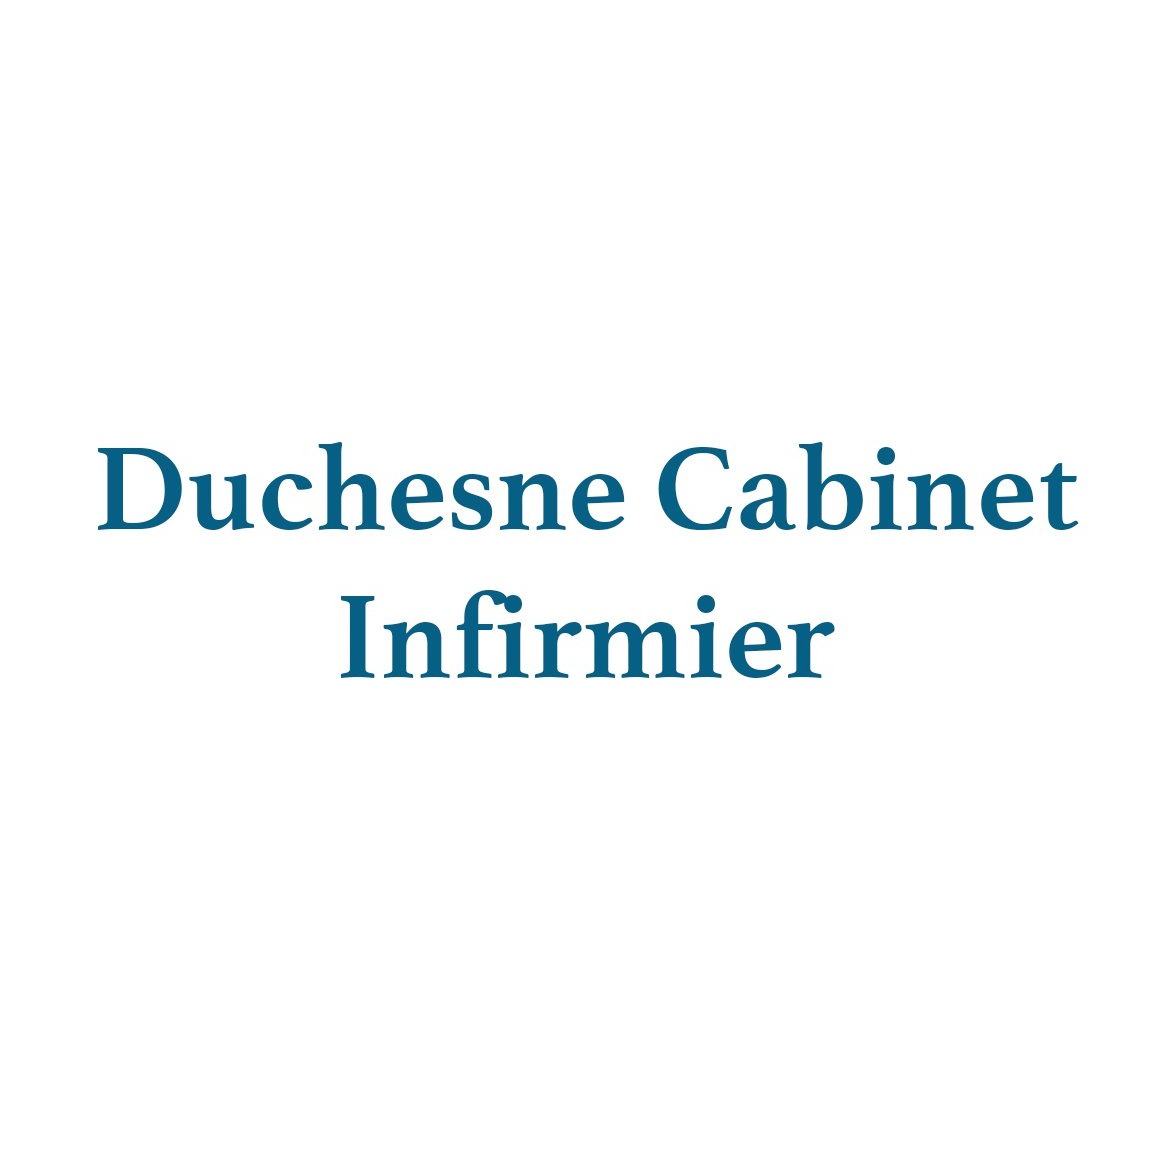 Duchesne Cabinet Infirmier